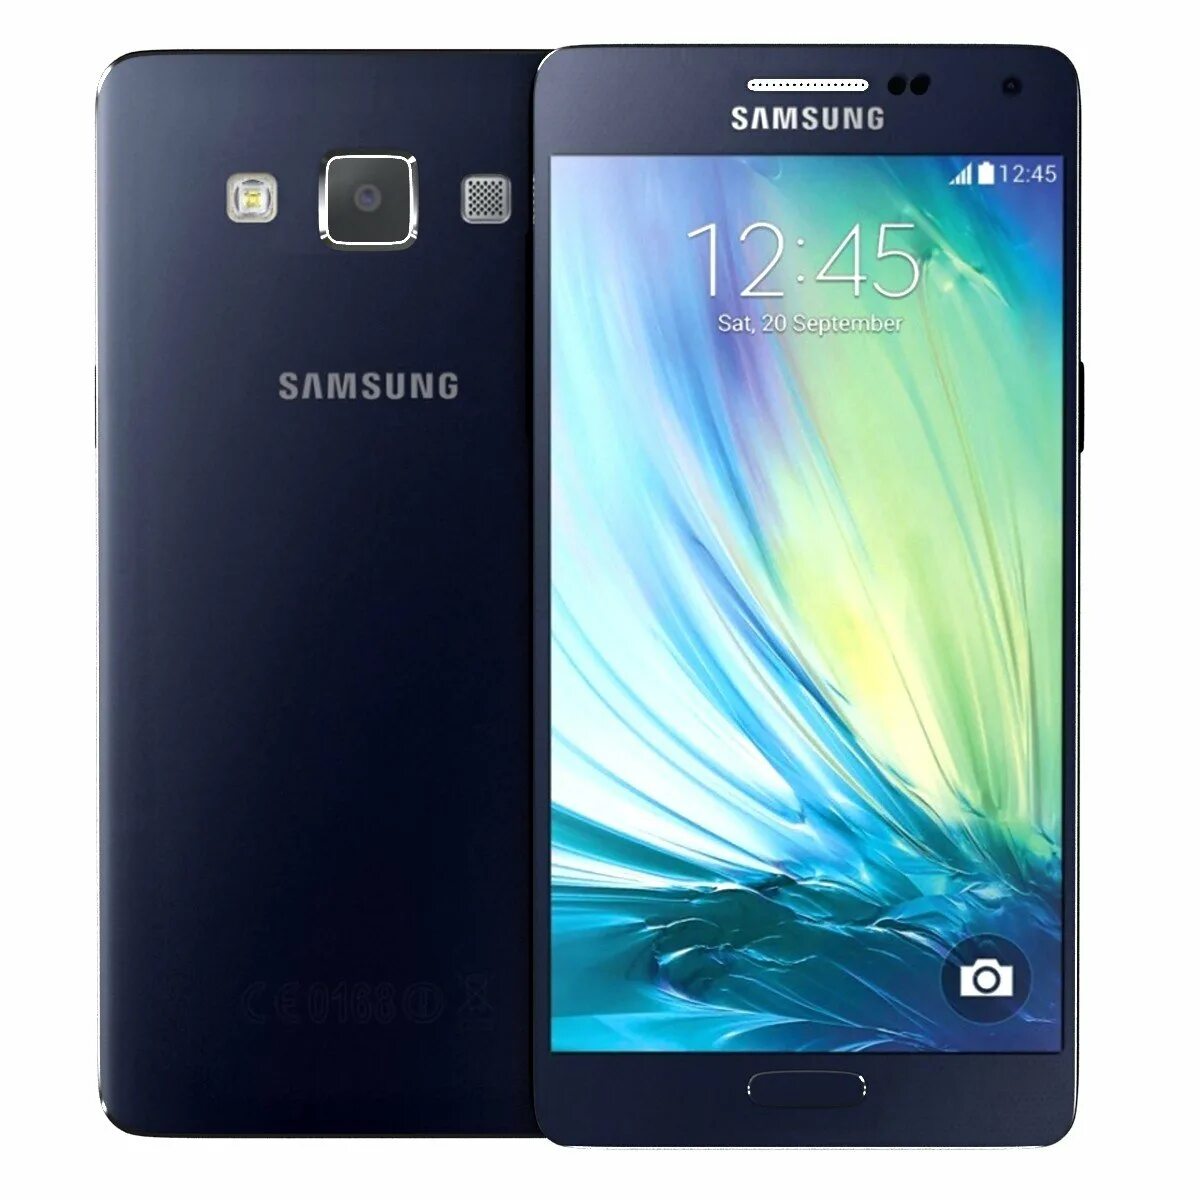 Самсунг телефон курск. Самсунг галакси а7 2015. Samsung Galaxy a7 SM a700fd. Смартфон Samsung Galaxy a7 2015. Samsung a3 2015 SM a300f.